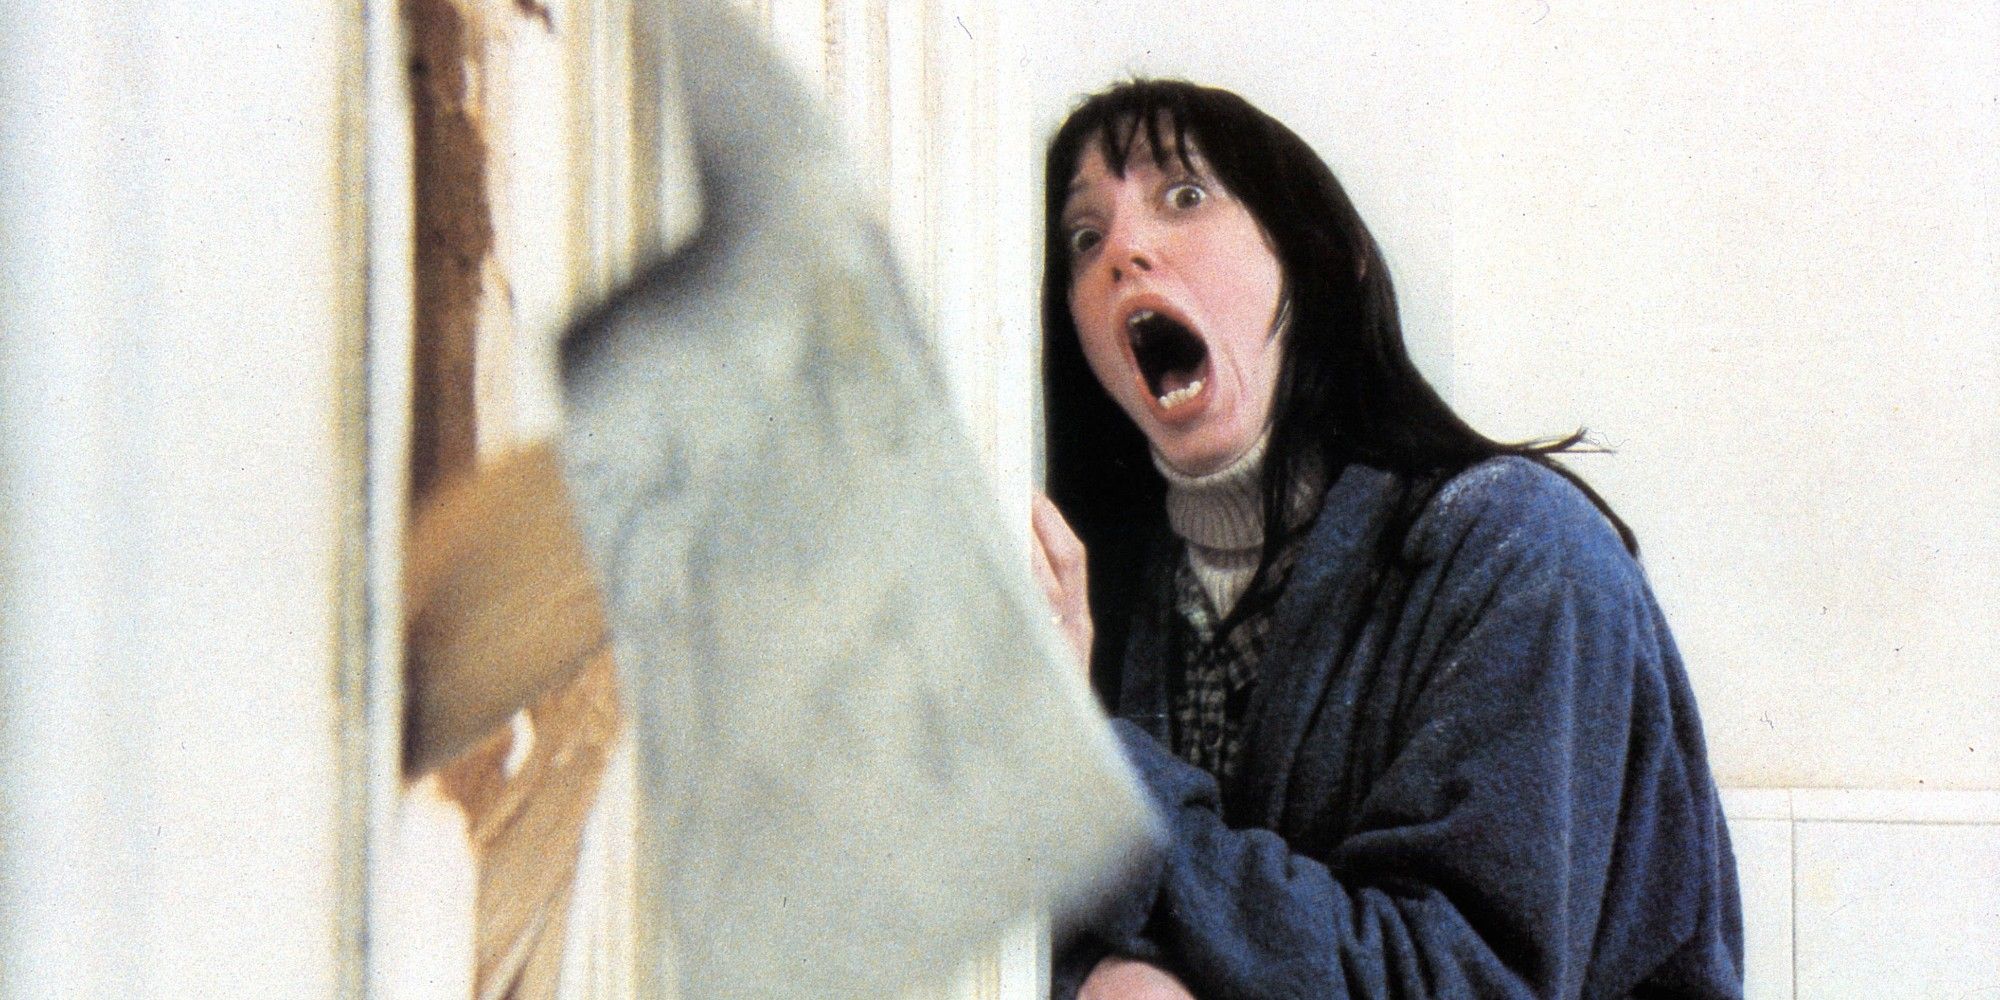 Wendy yelling in fear in The Shining